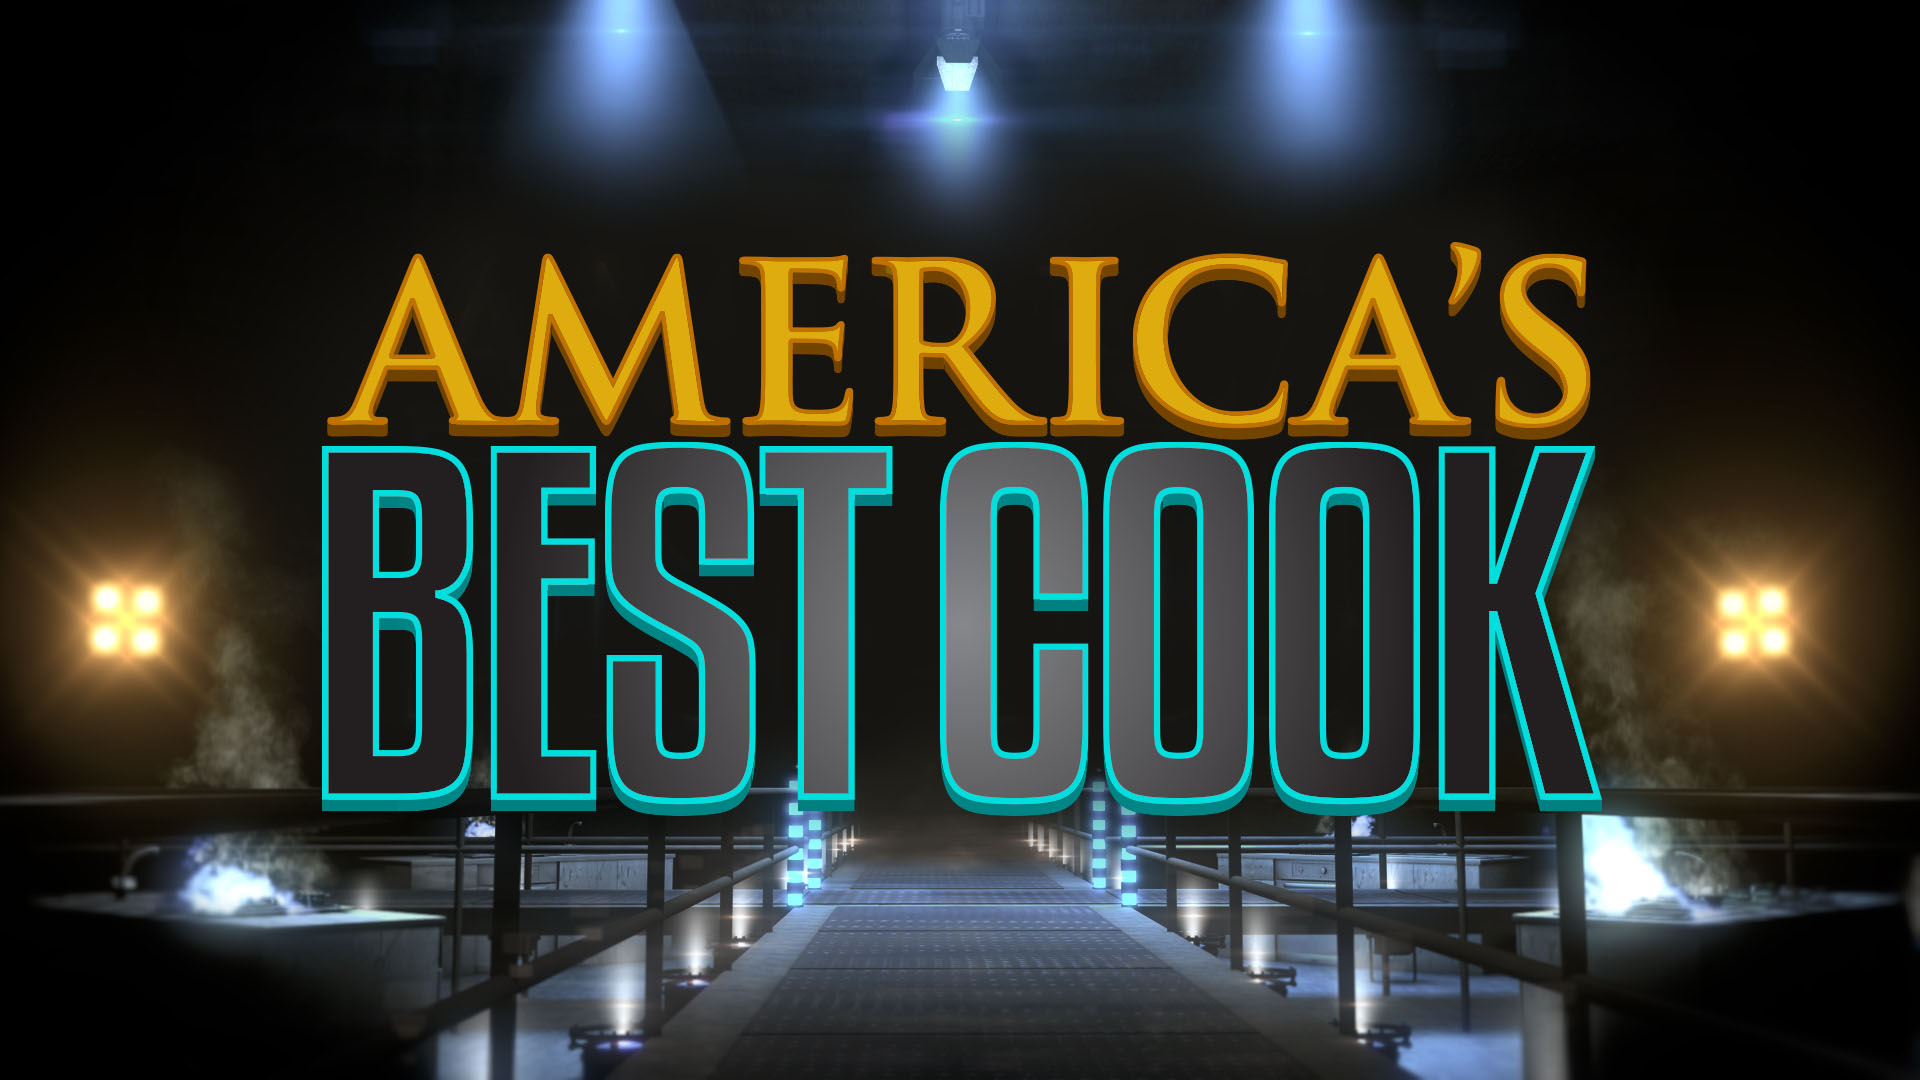 Americas Best Cooks Online - Full Episodes of Season 1